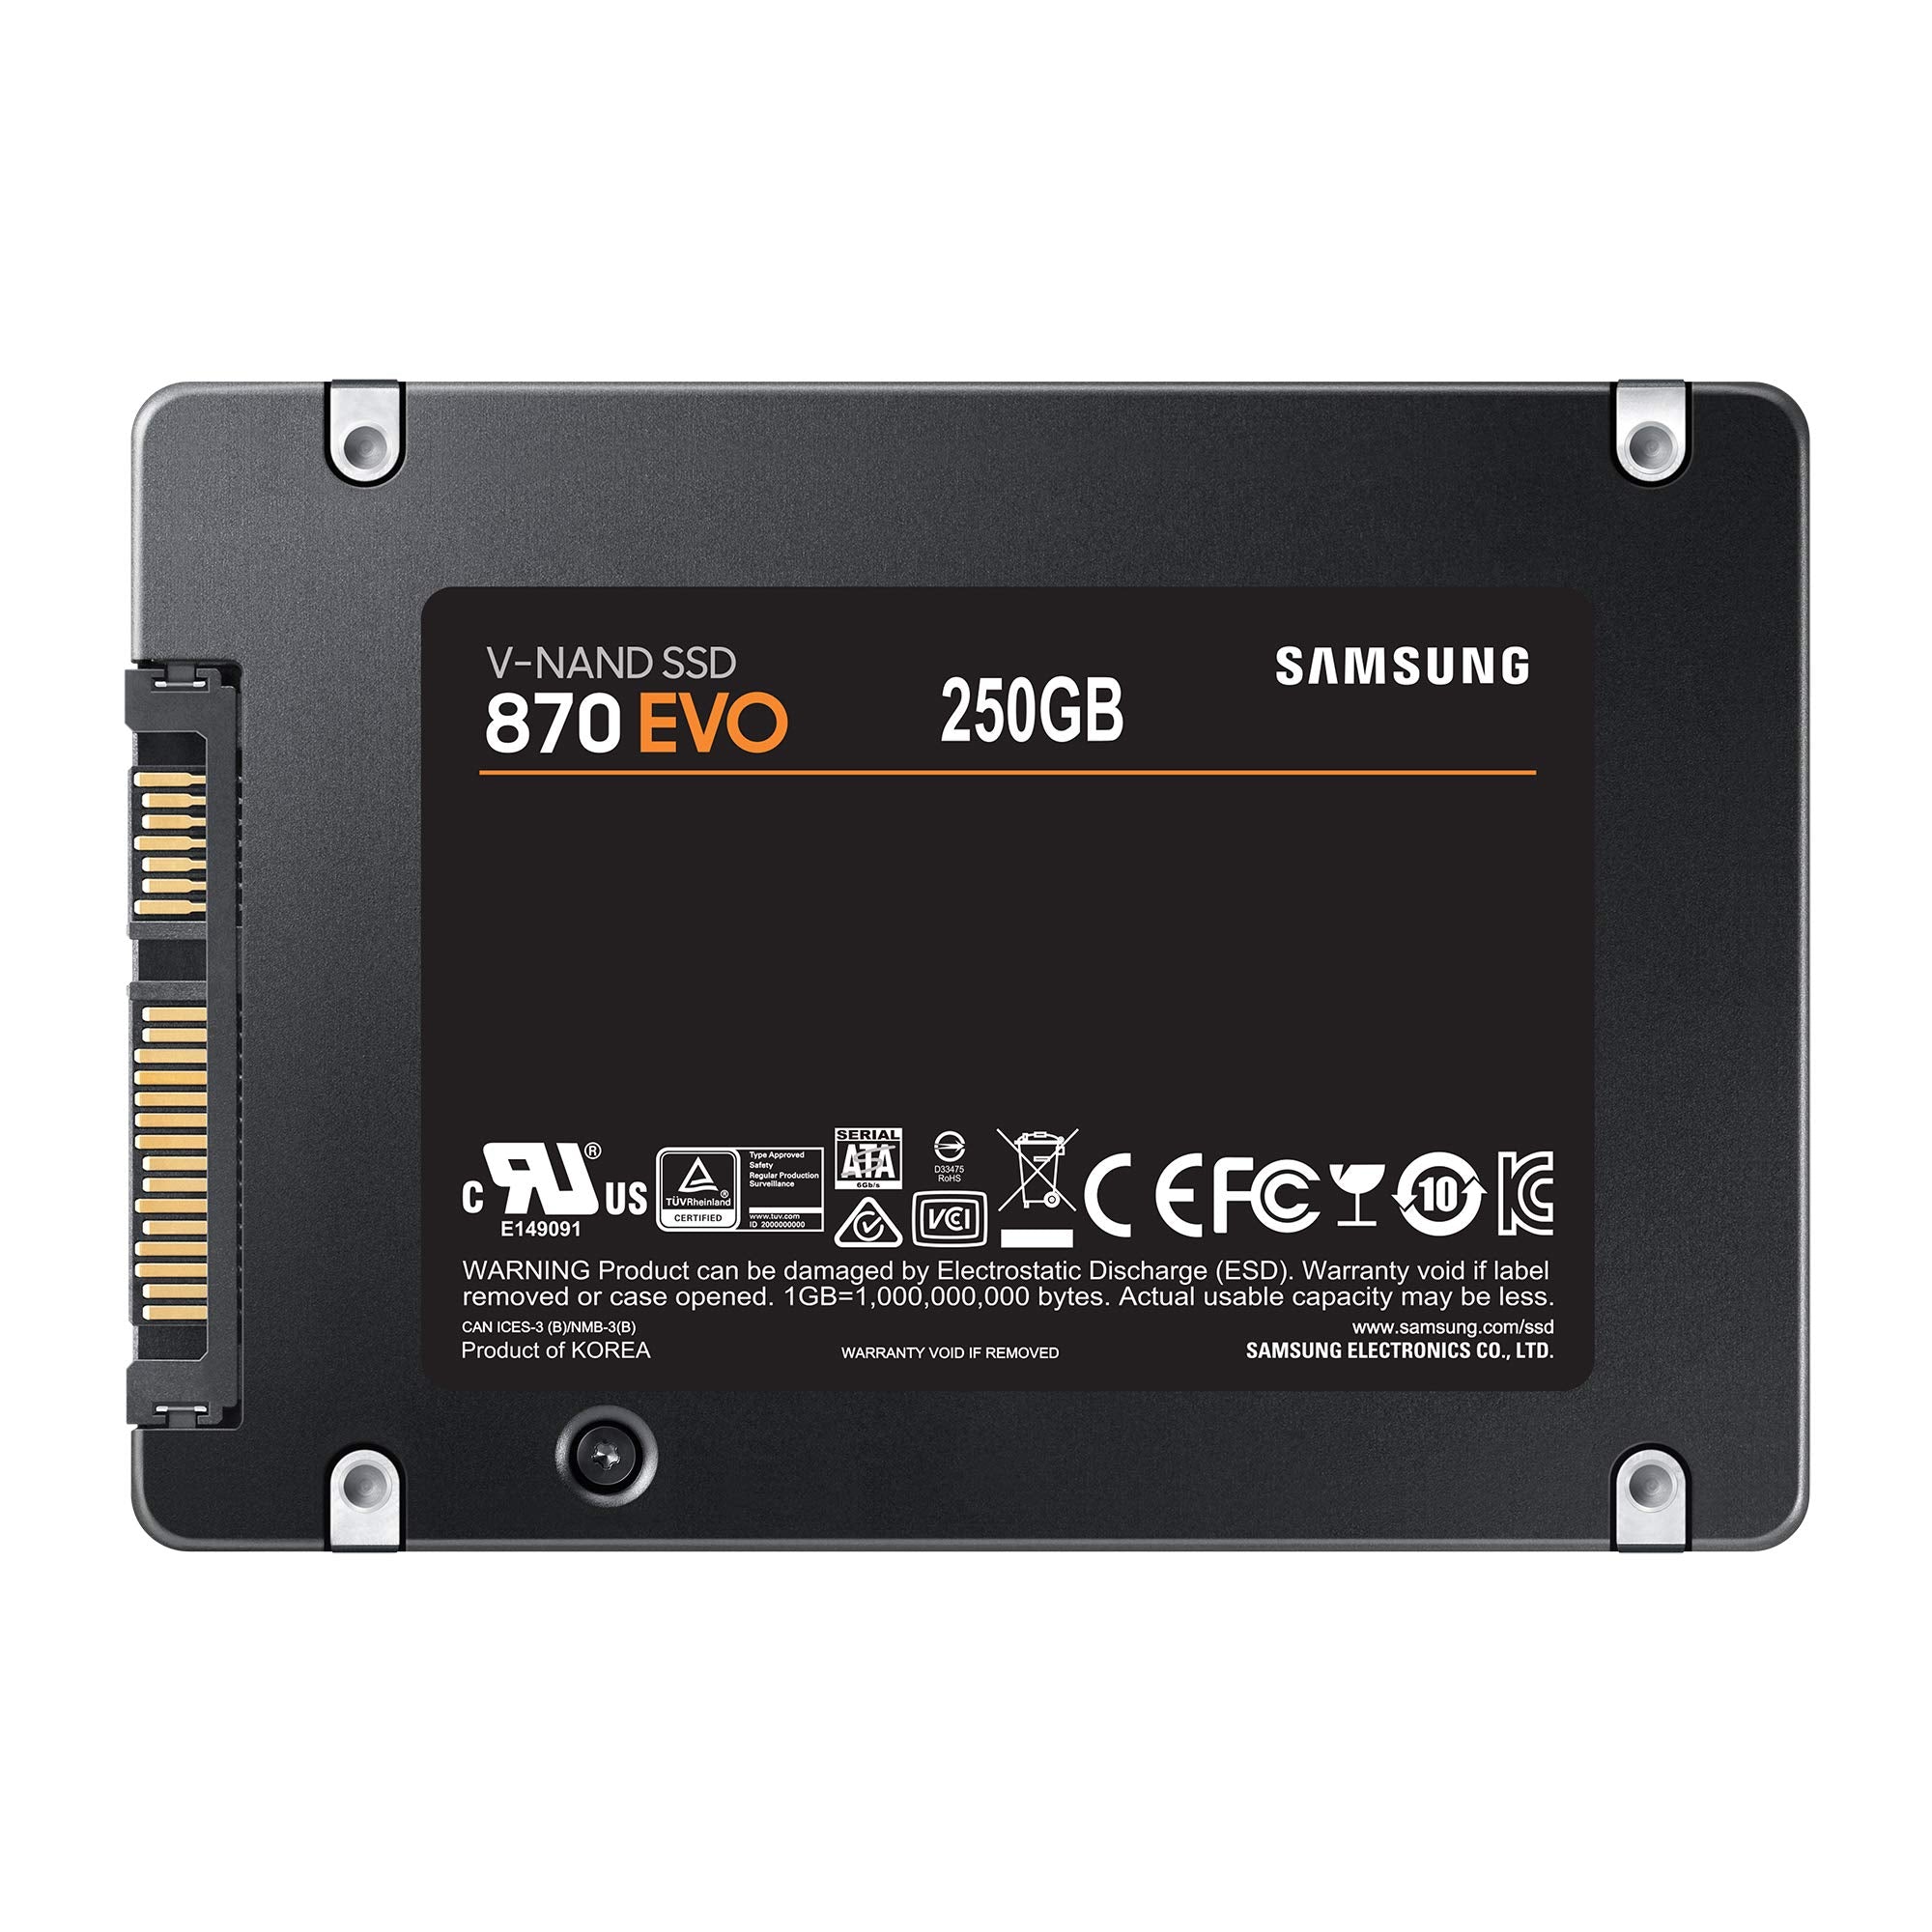 Samsung SSD 870 EVO, 250 GB, Form Factor 2.5”, Intelligent Turbo Write, Magician 6 Software, Black